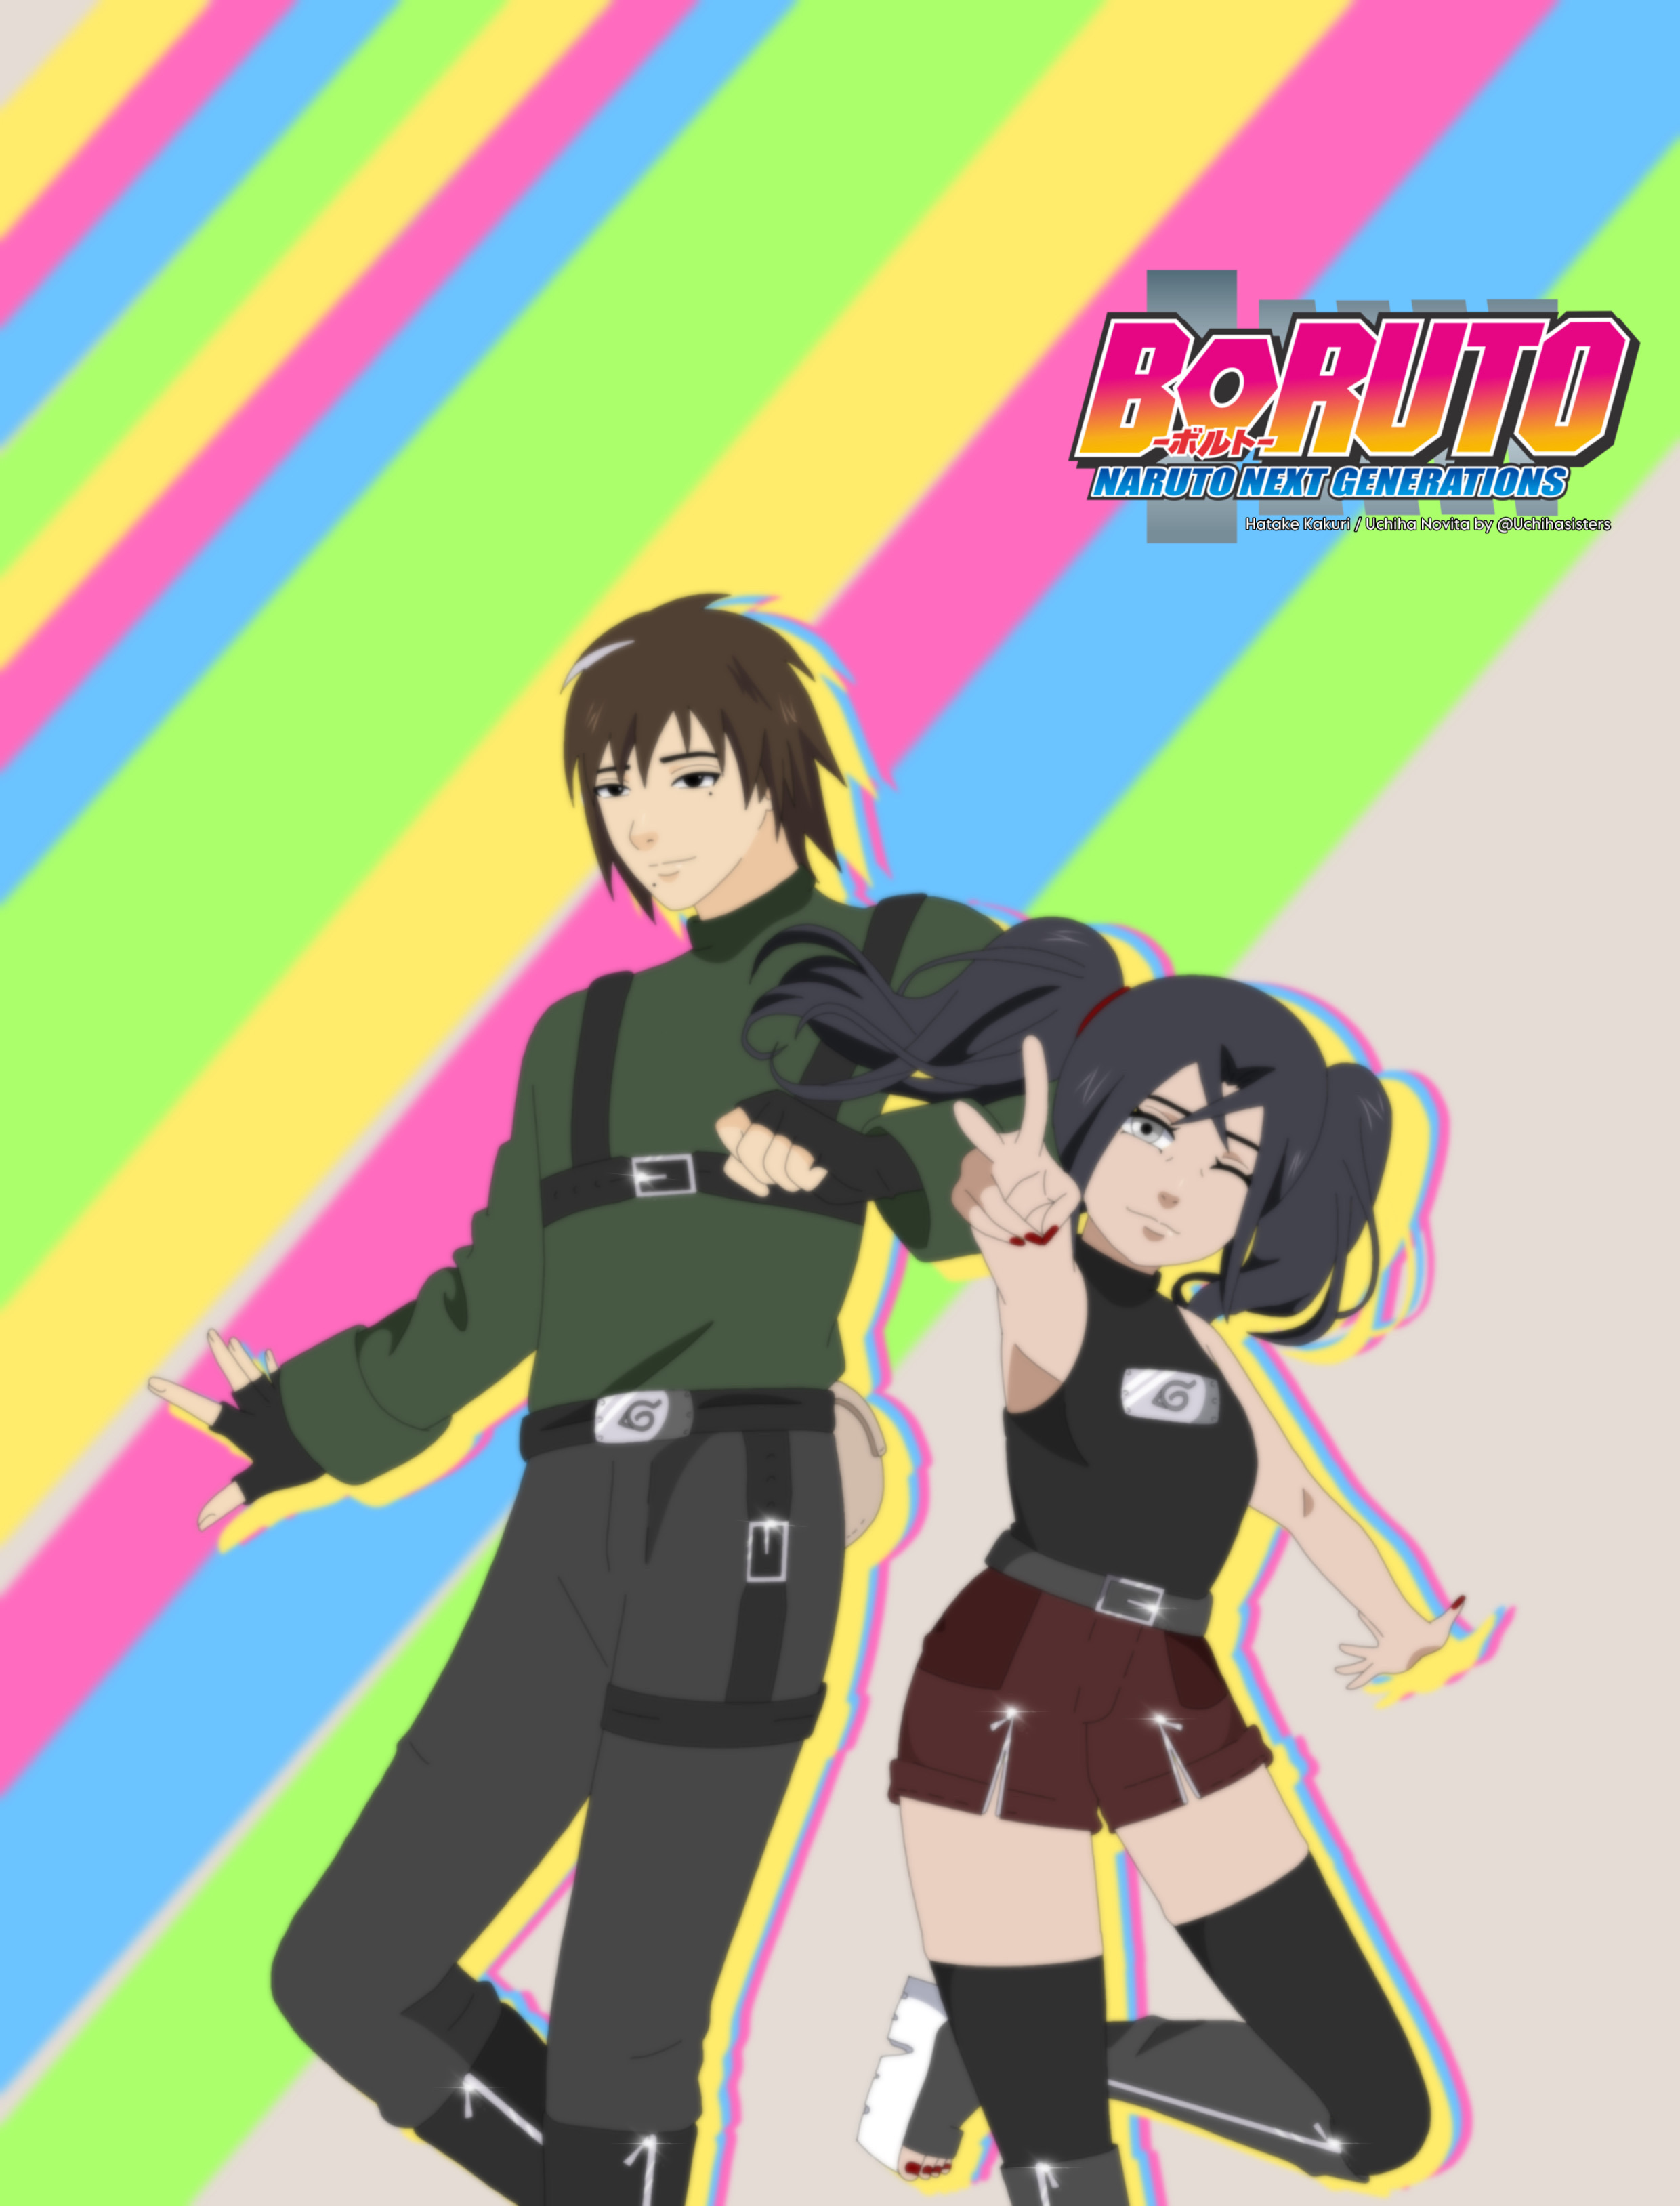 Boruto: Naruto Next Generations Shippuden by shinauchiha on DeviantArt